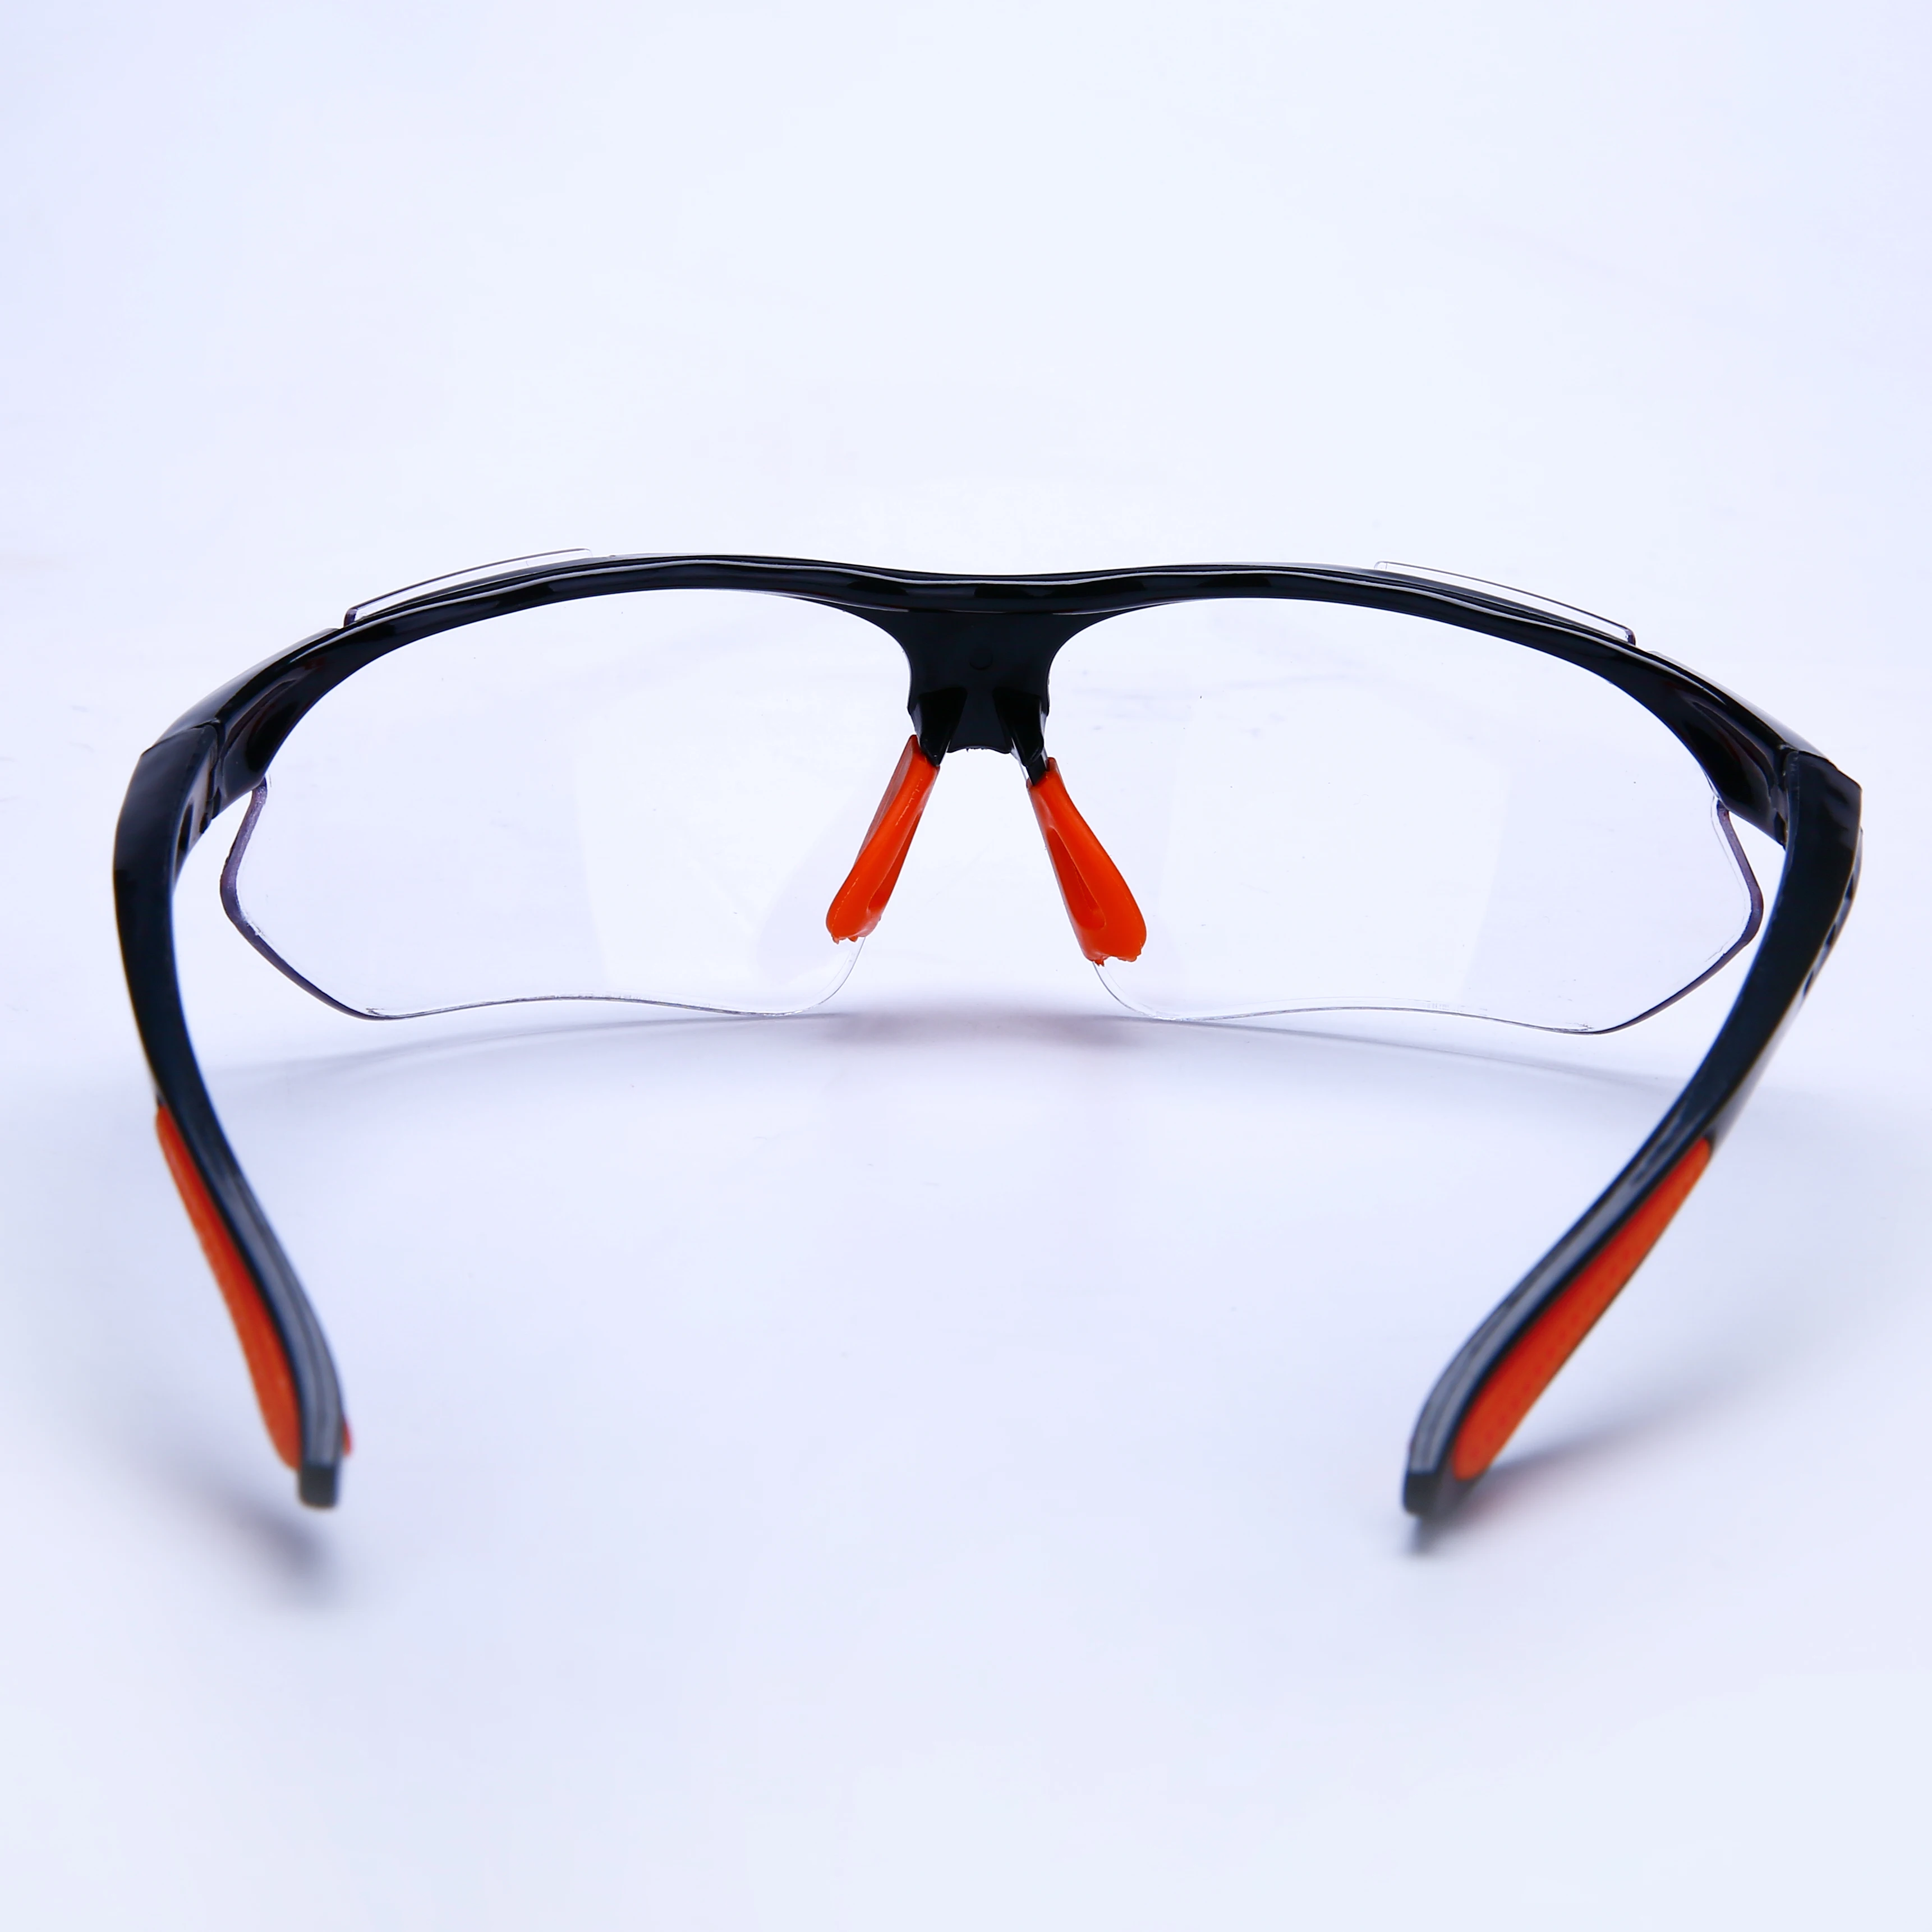 Latest stylish Black frame Safety Glasses for working use